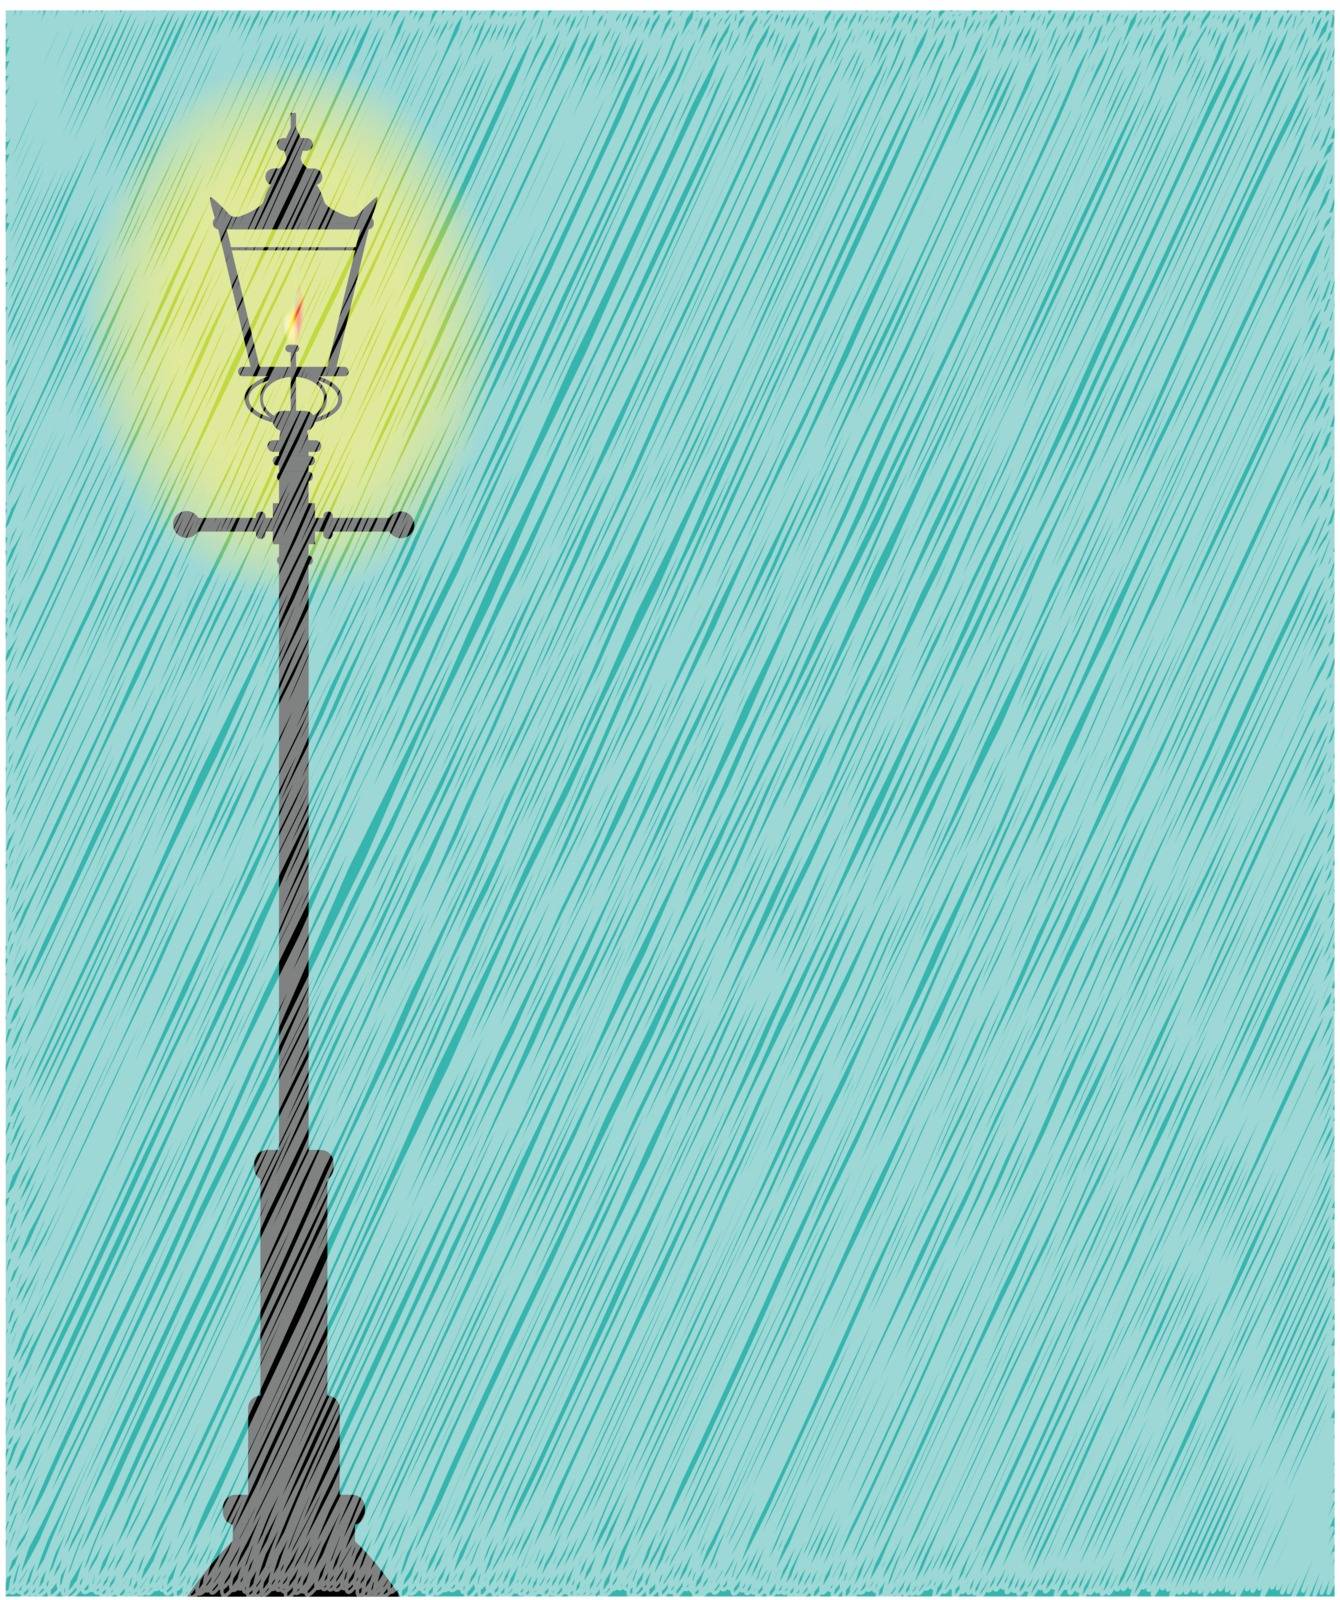 A lit gaslight in a downpour of heavy rain